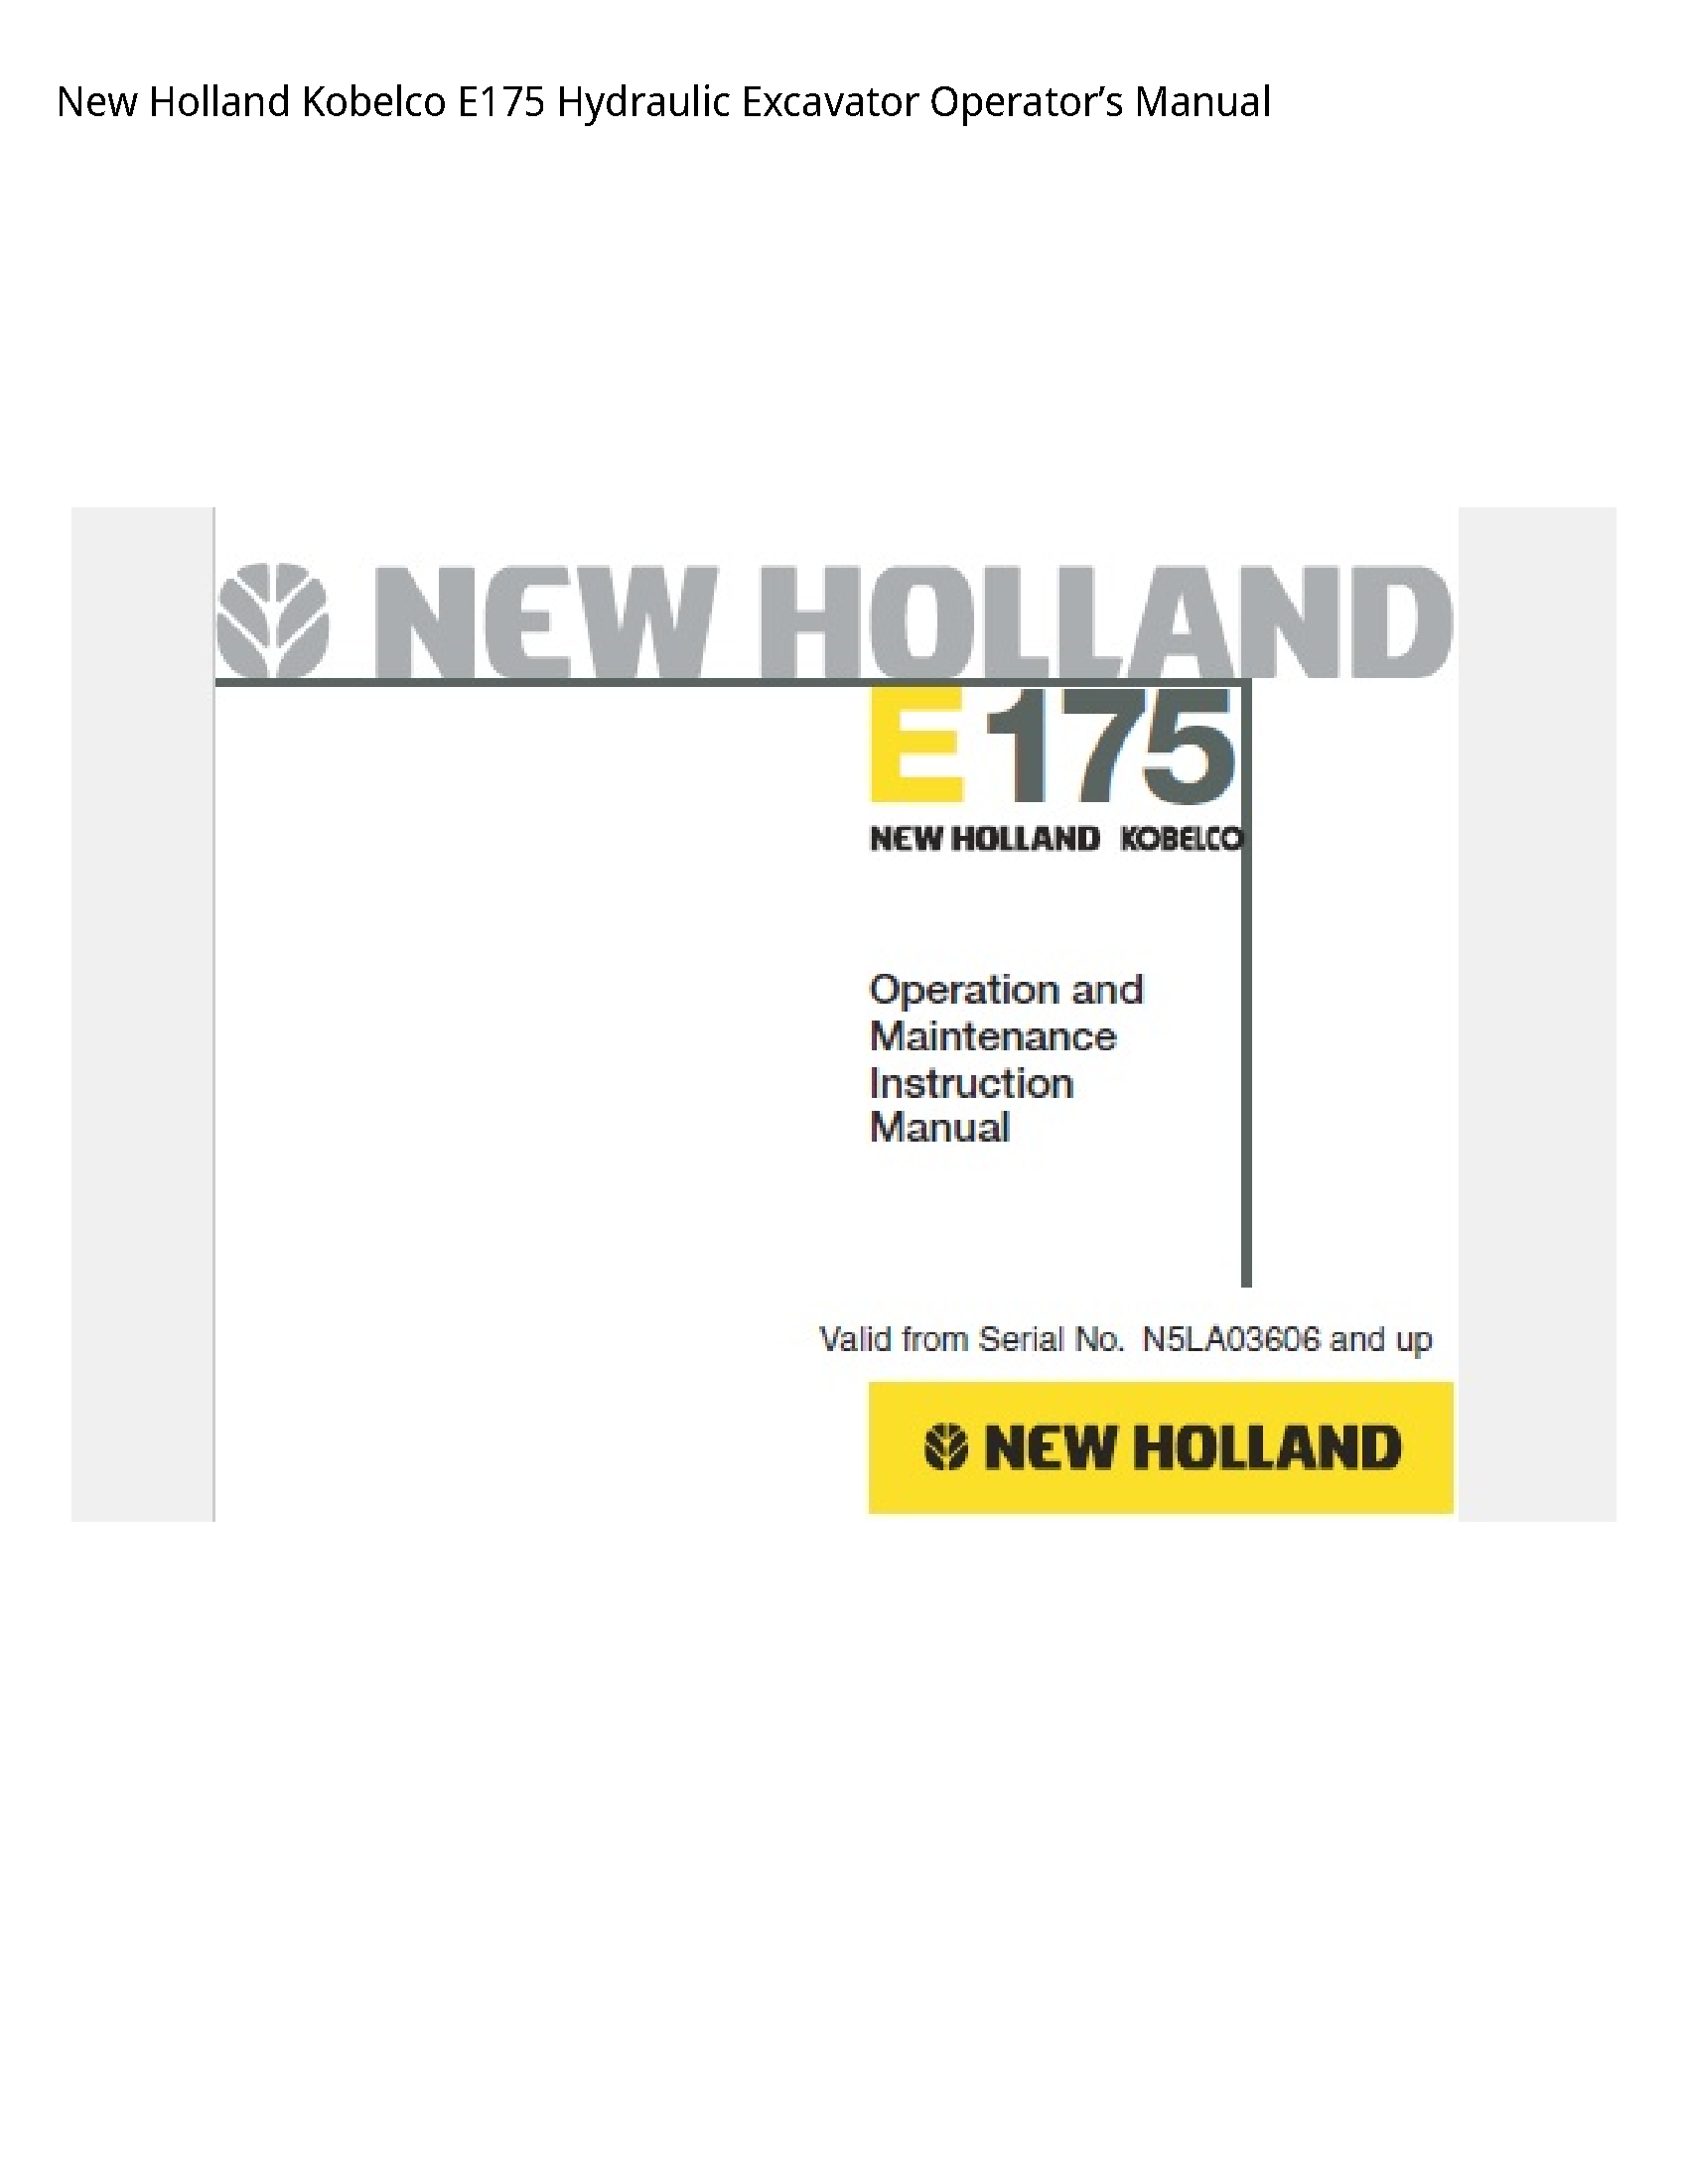 New Holland E175 Kobelco Hydraulic Excavator Operator’s manual